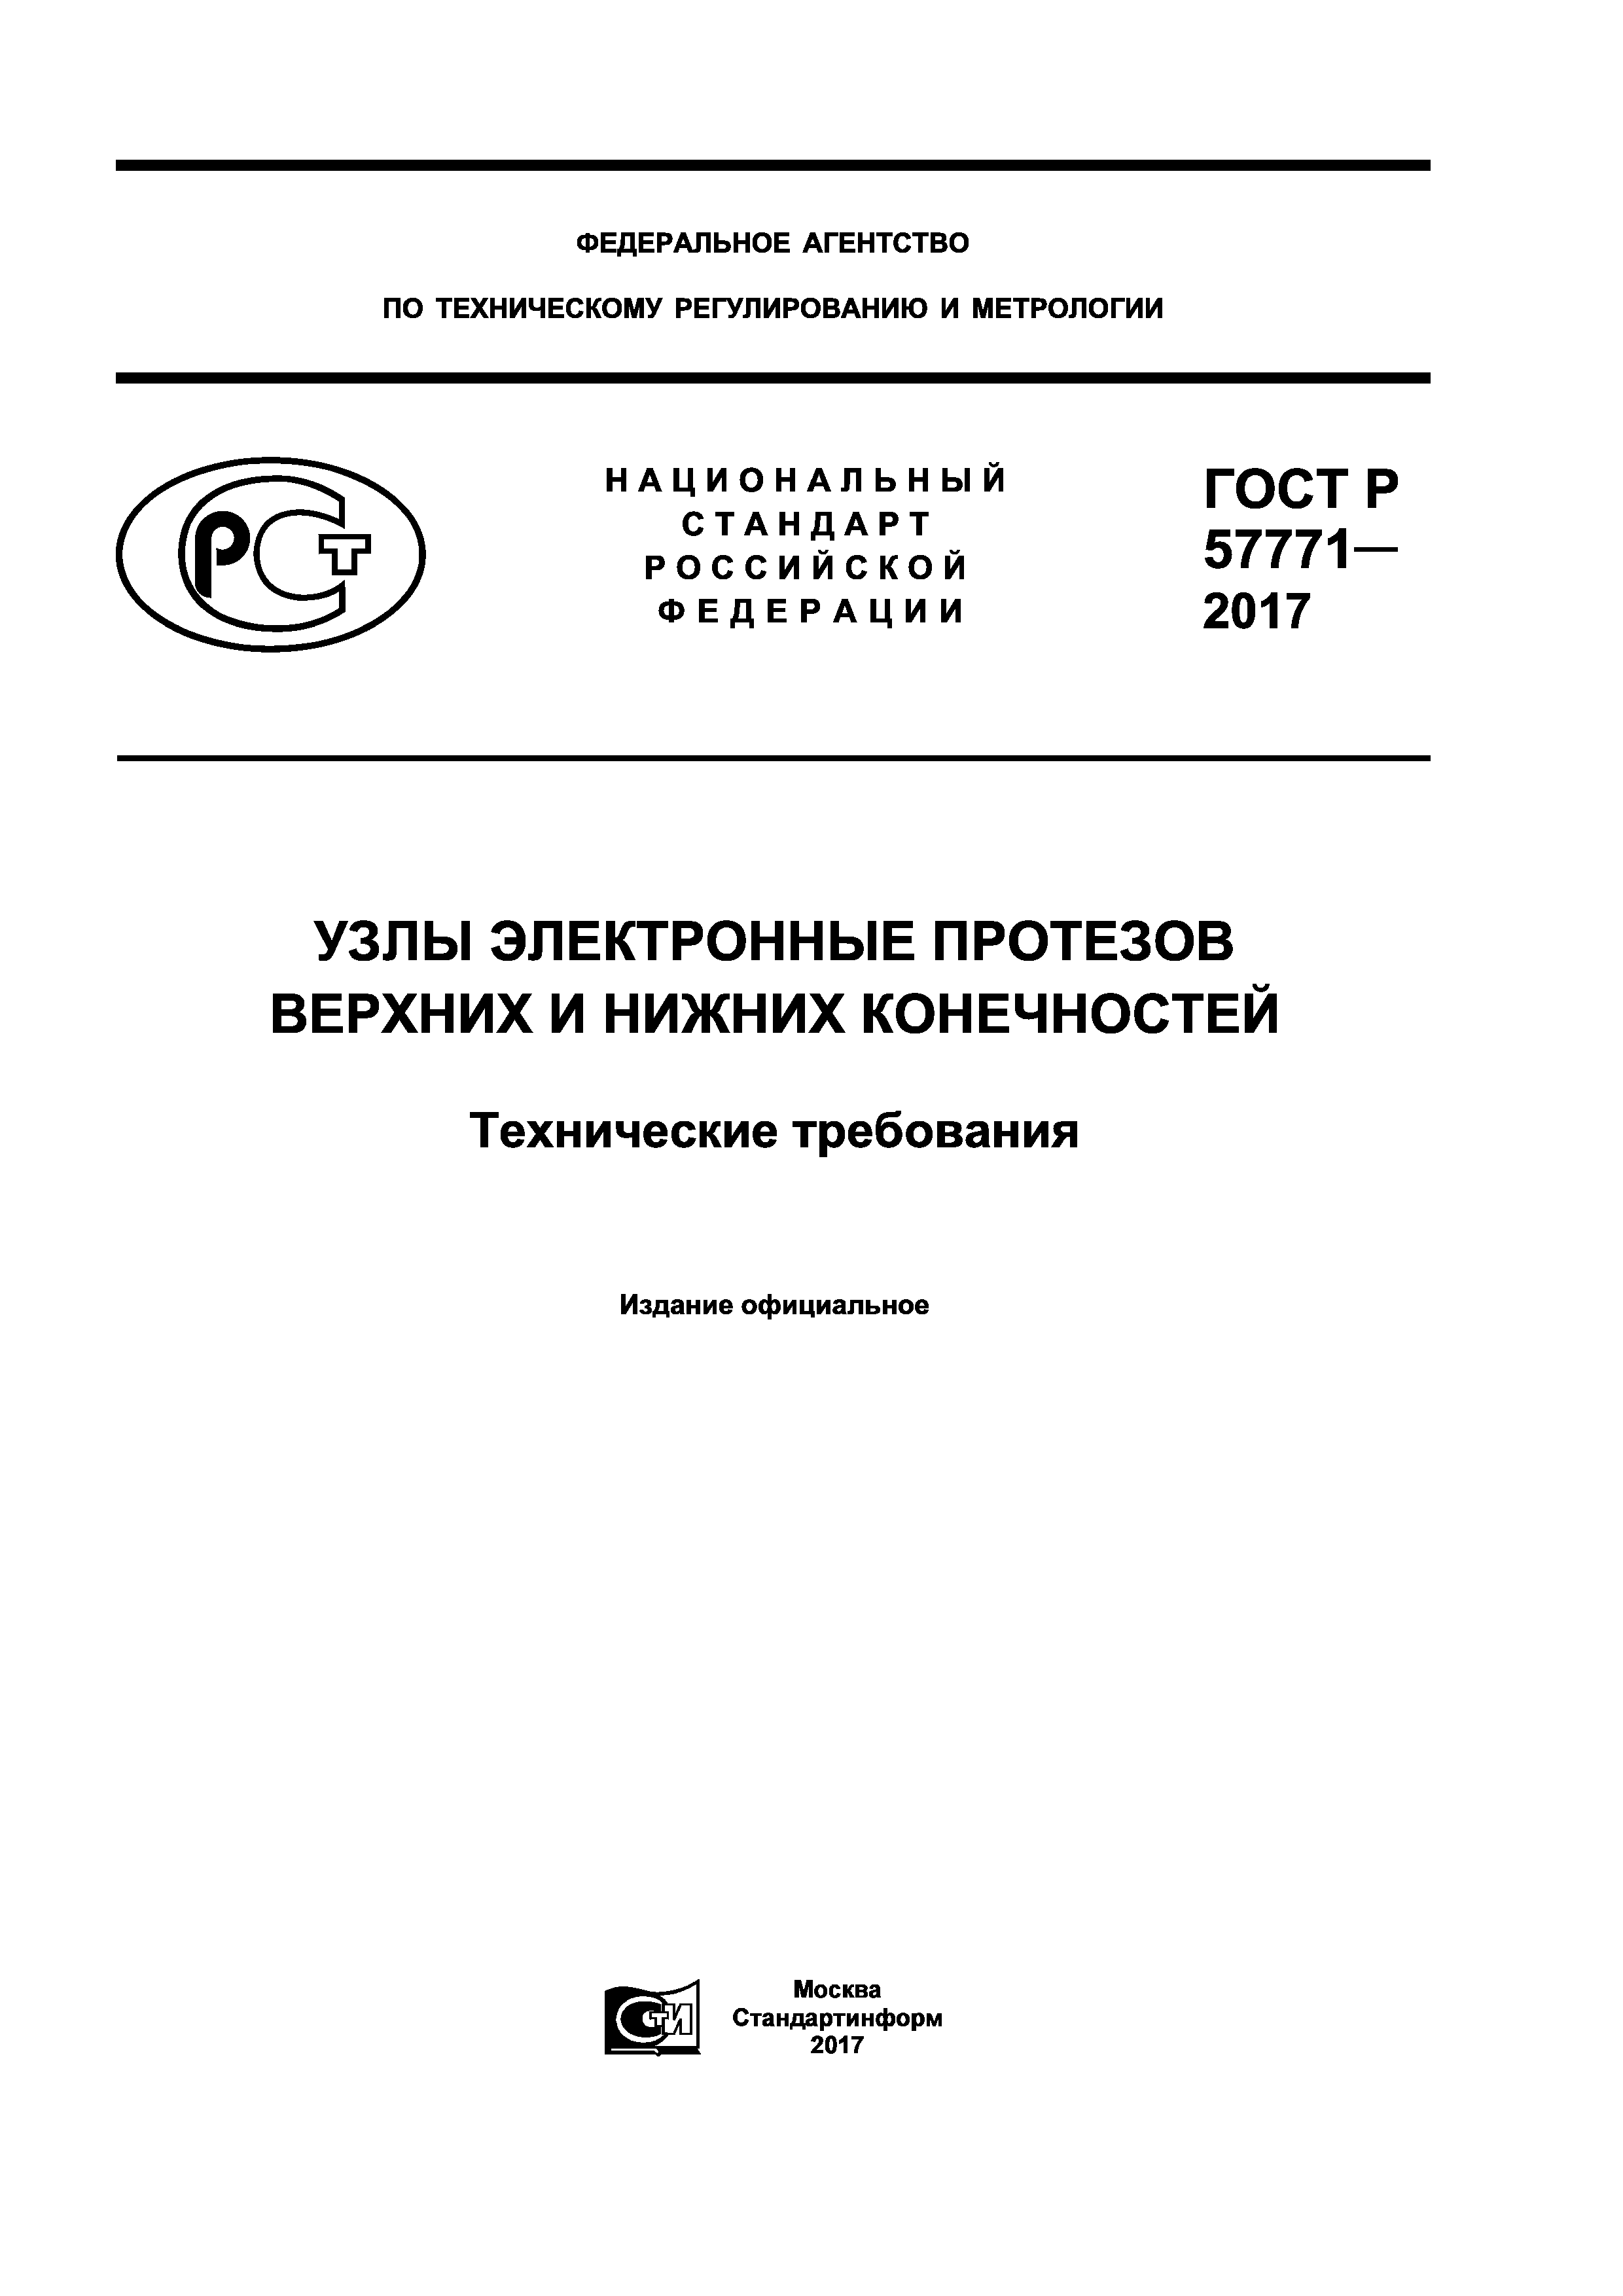 ГОСТ Р 57771-2017